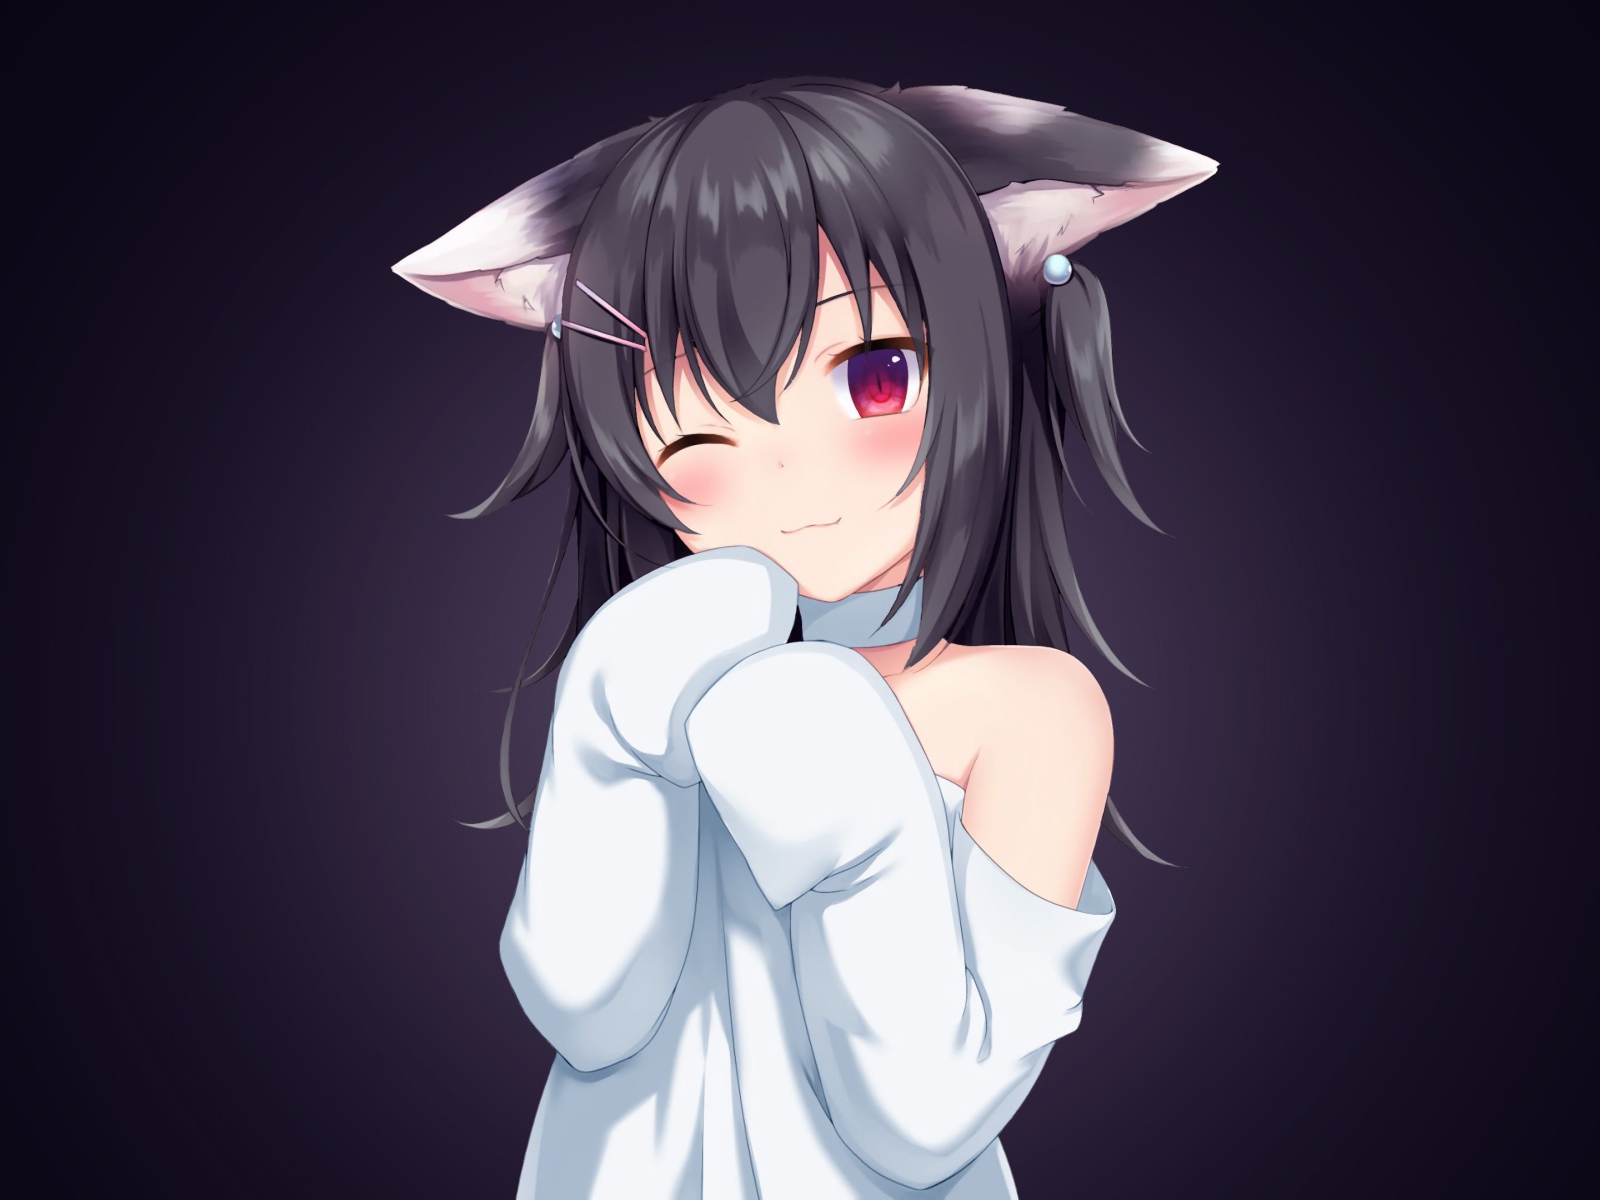 Anime girl with cat ears